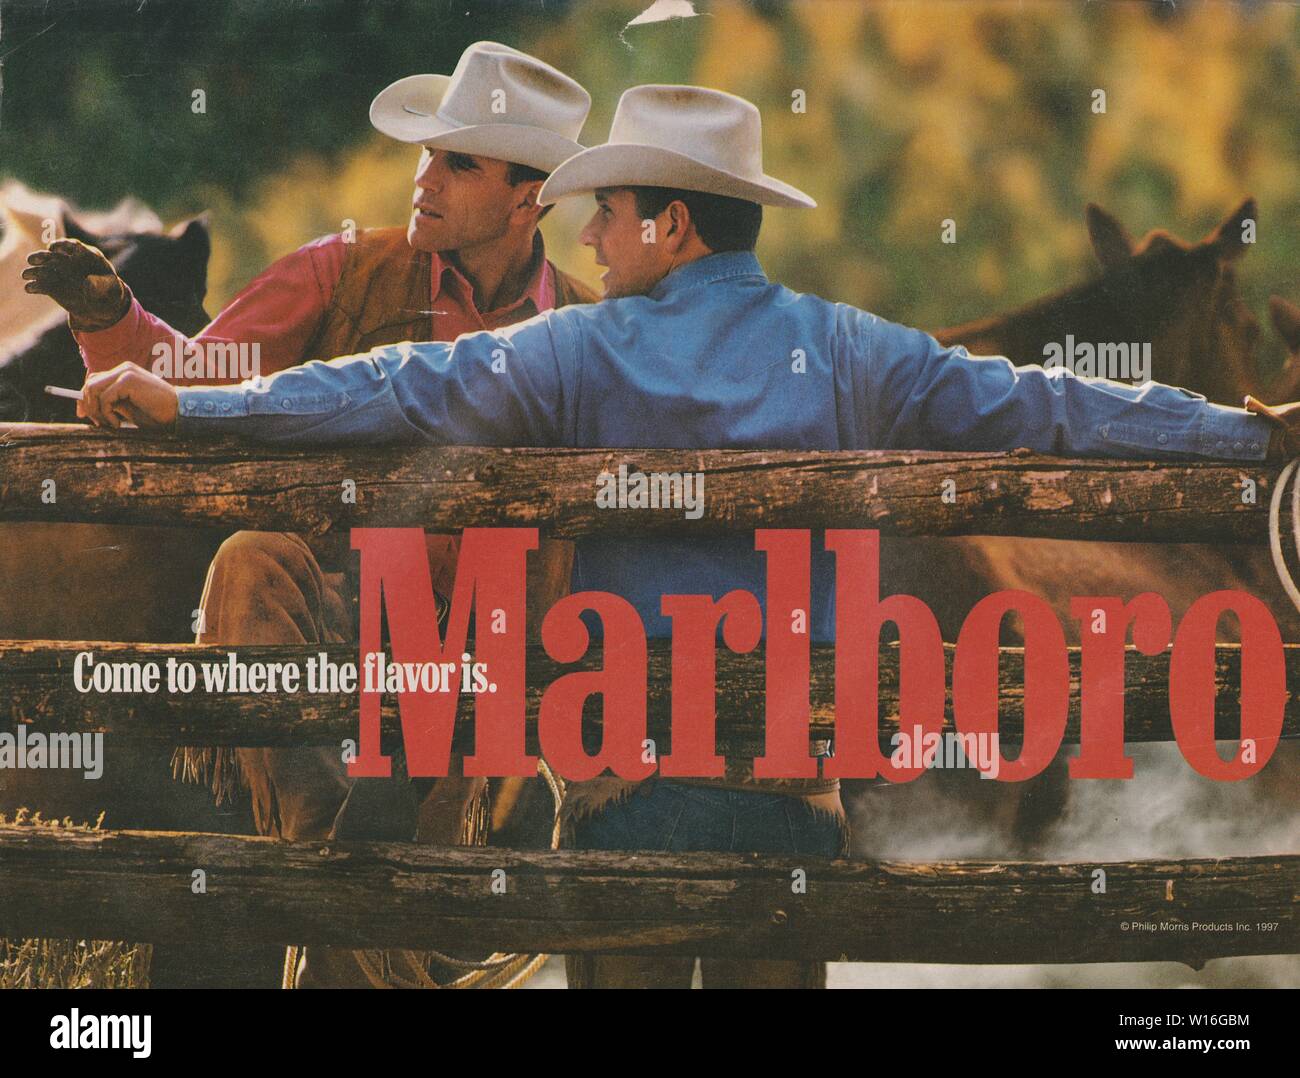 poster advertising Marlboro cigarettes, magazine 1997, Come to Where the flavor is slogan, creative advertisement Marlboro from 1990s Stock Photo